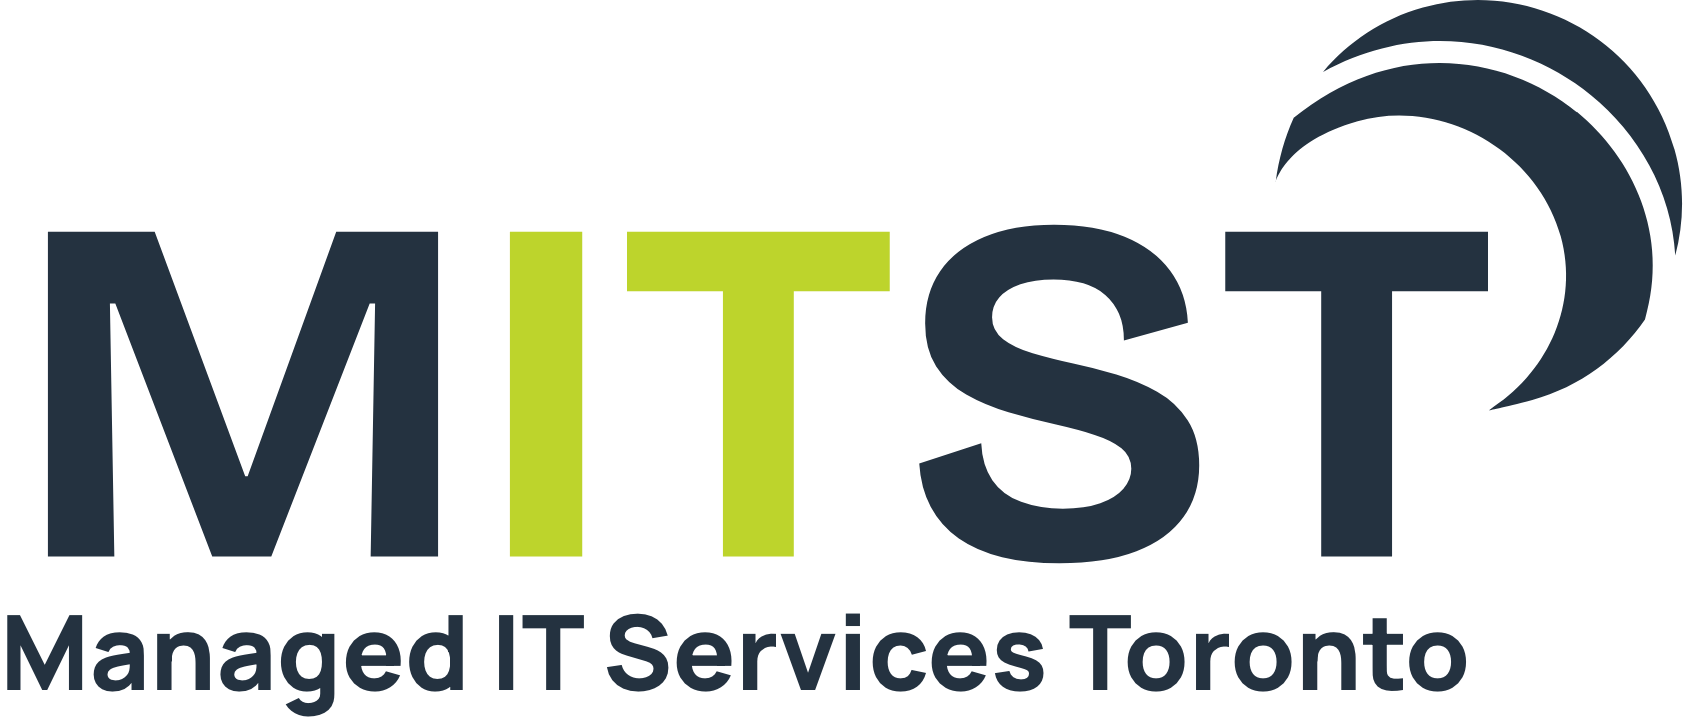 Managed IT Services Toronto Logo